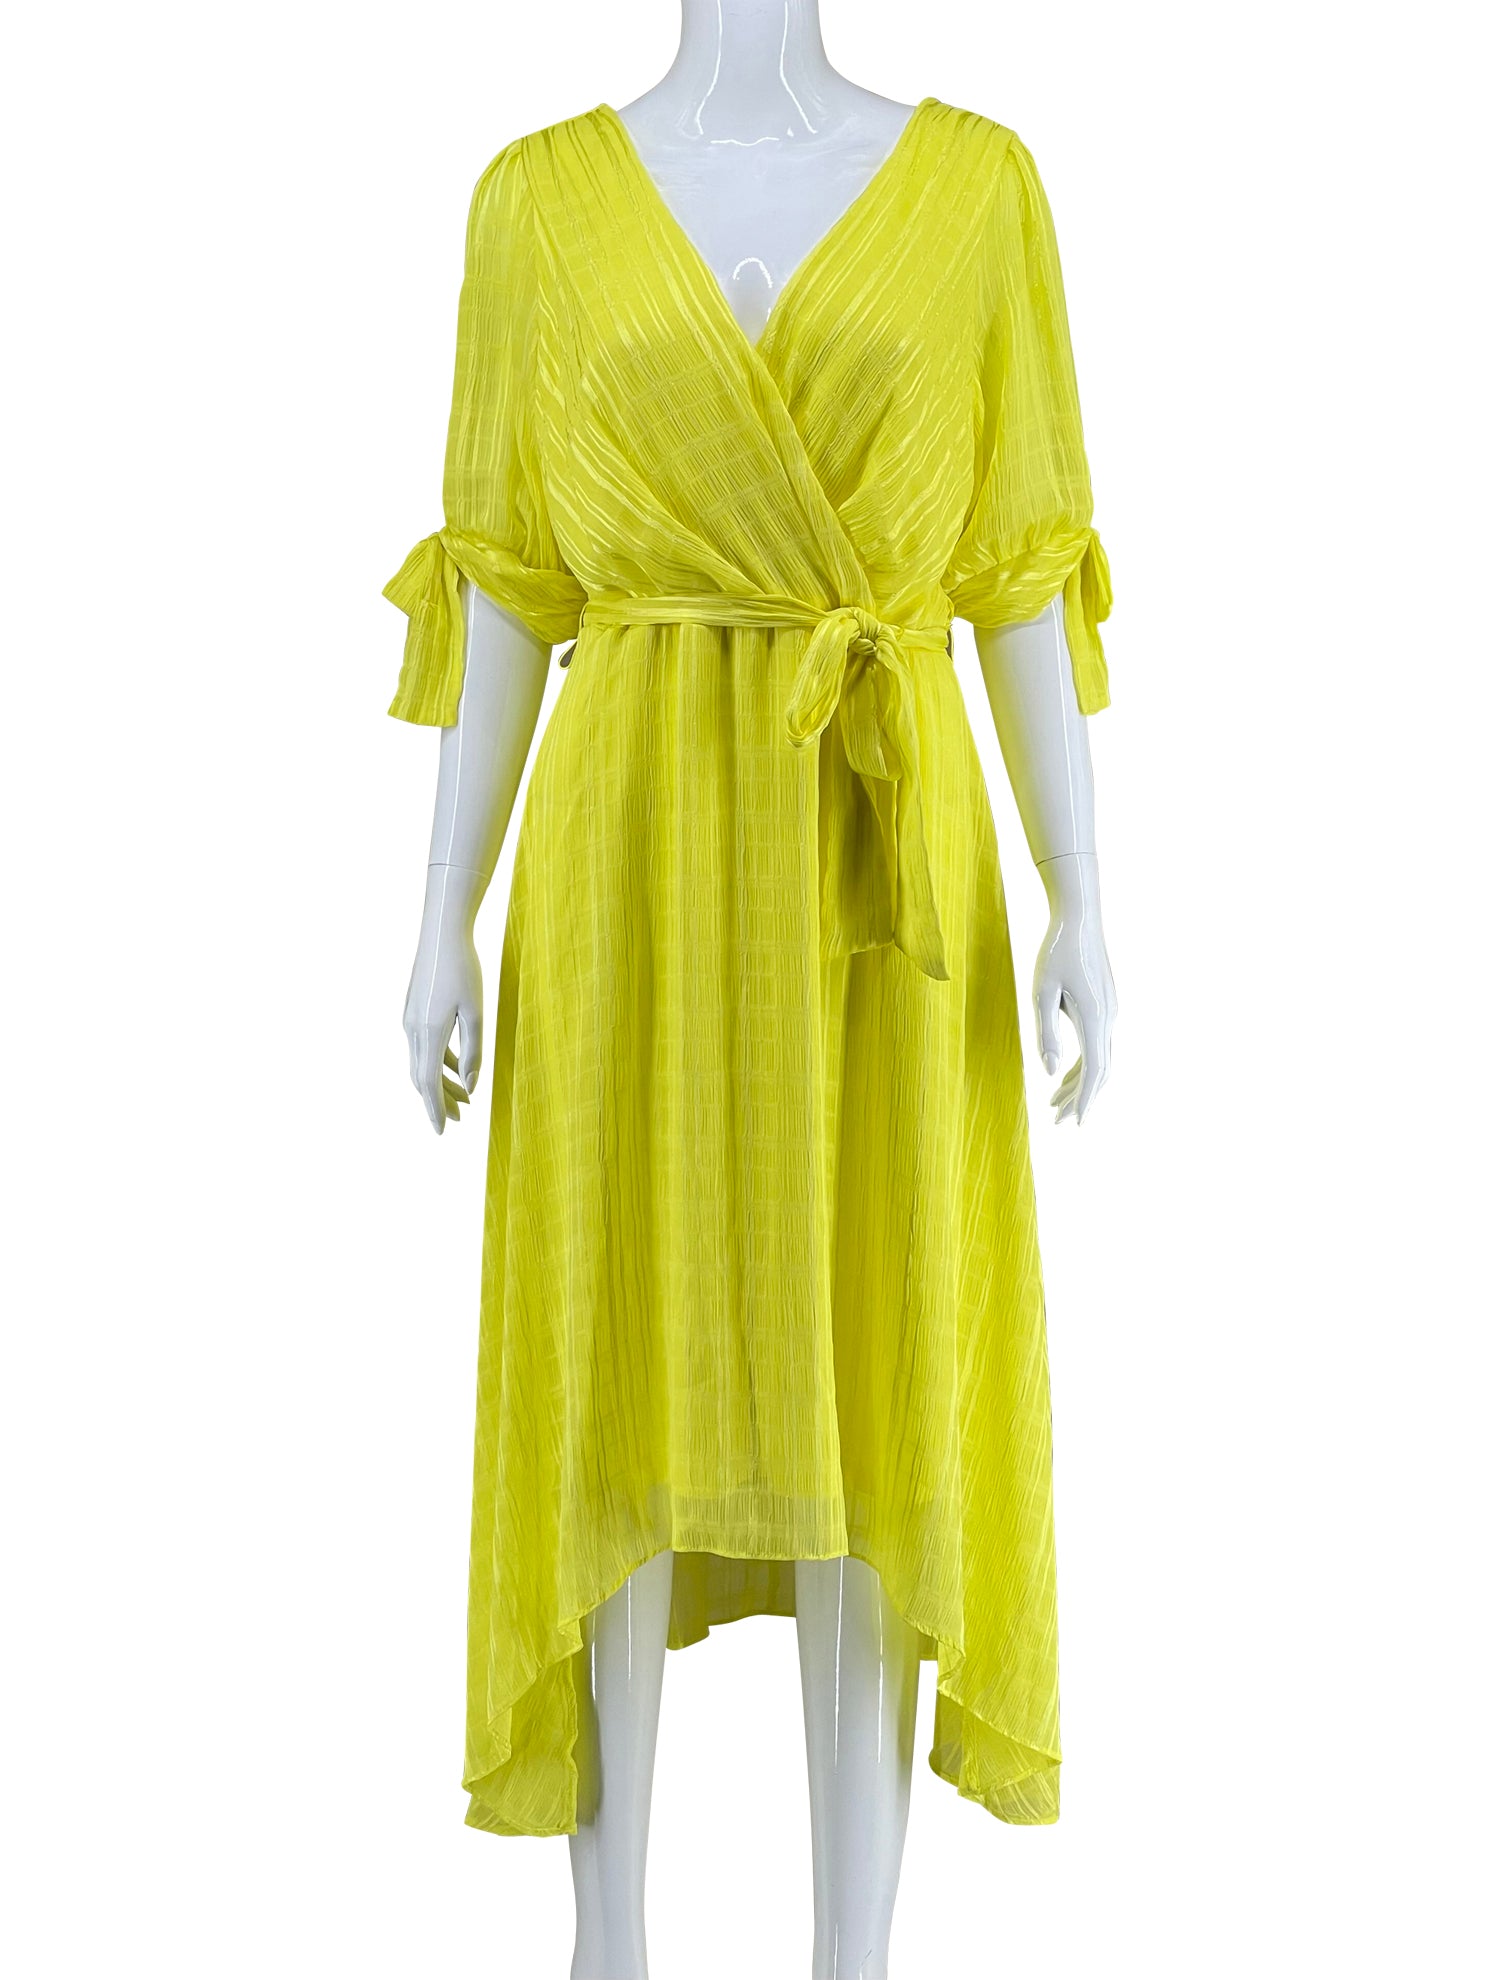 DKNY Yellow Bow Wrap Dress